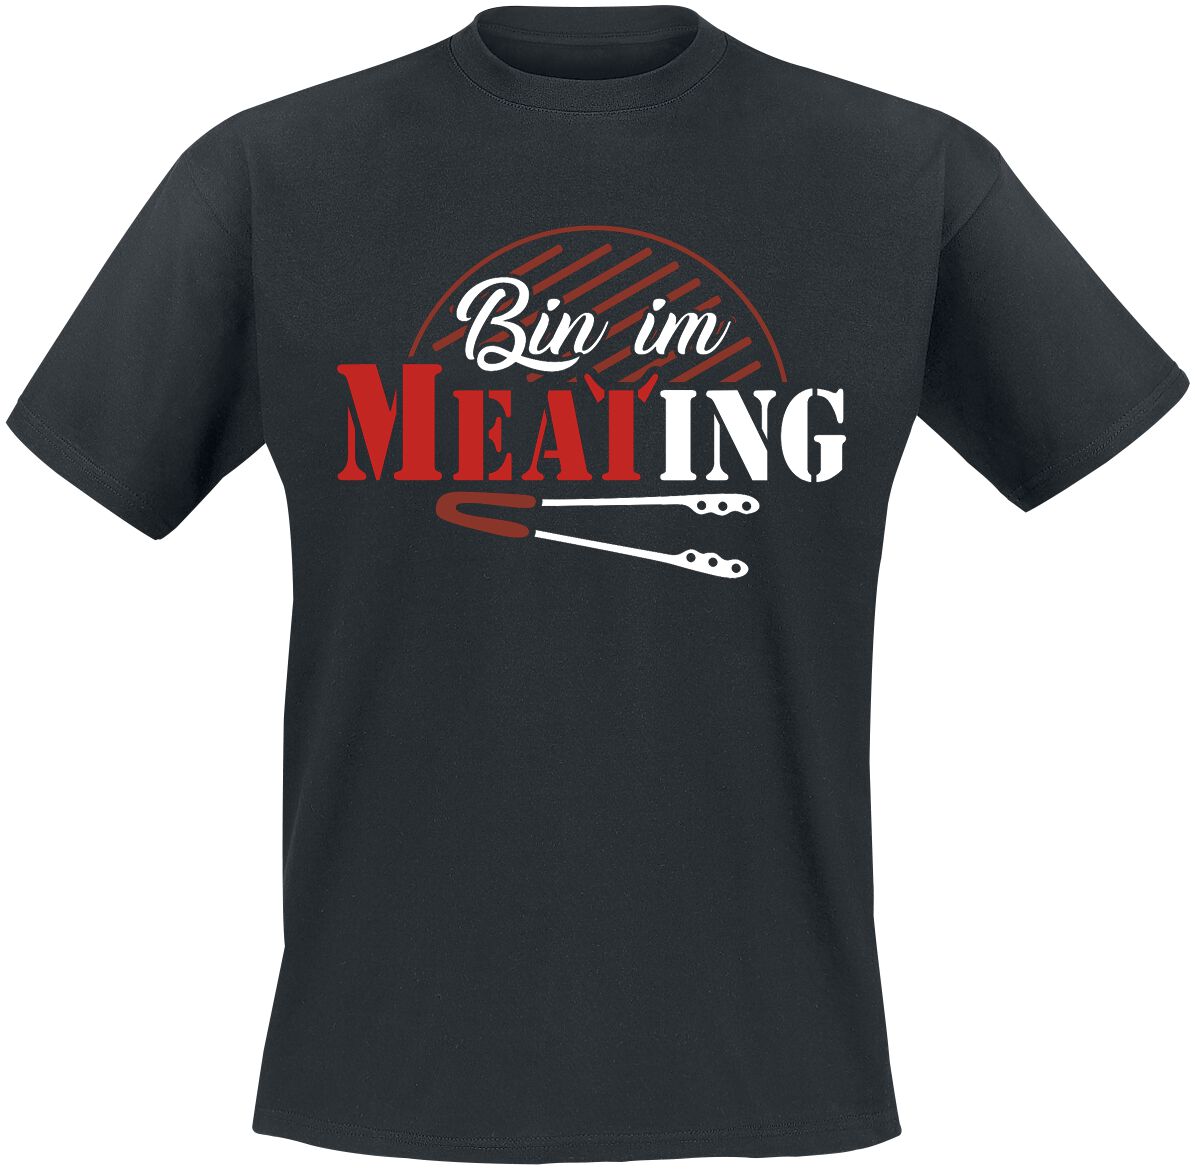 Food Bin im Meating T-Shirt schwarz in XL